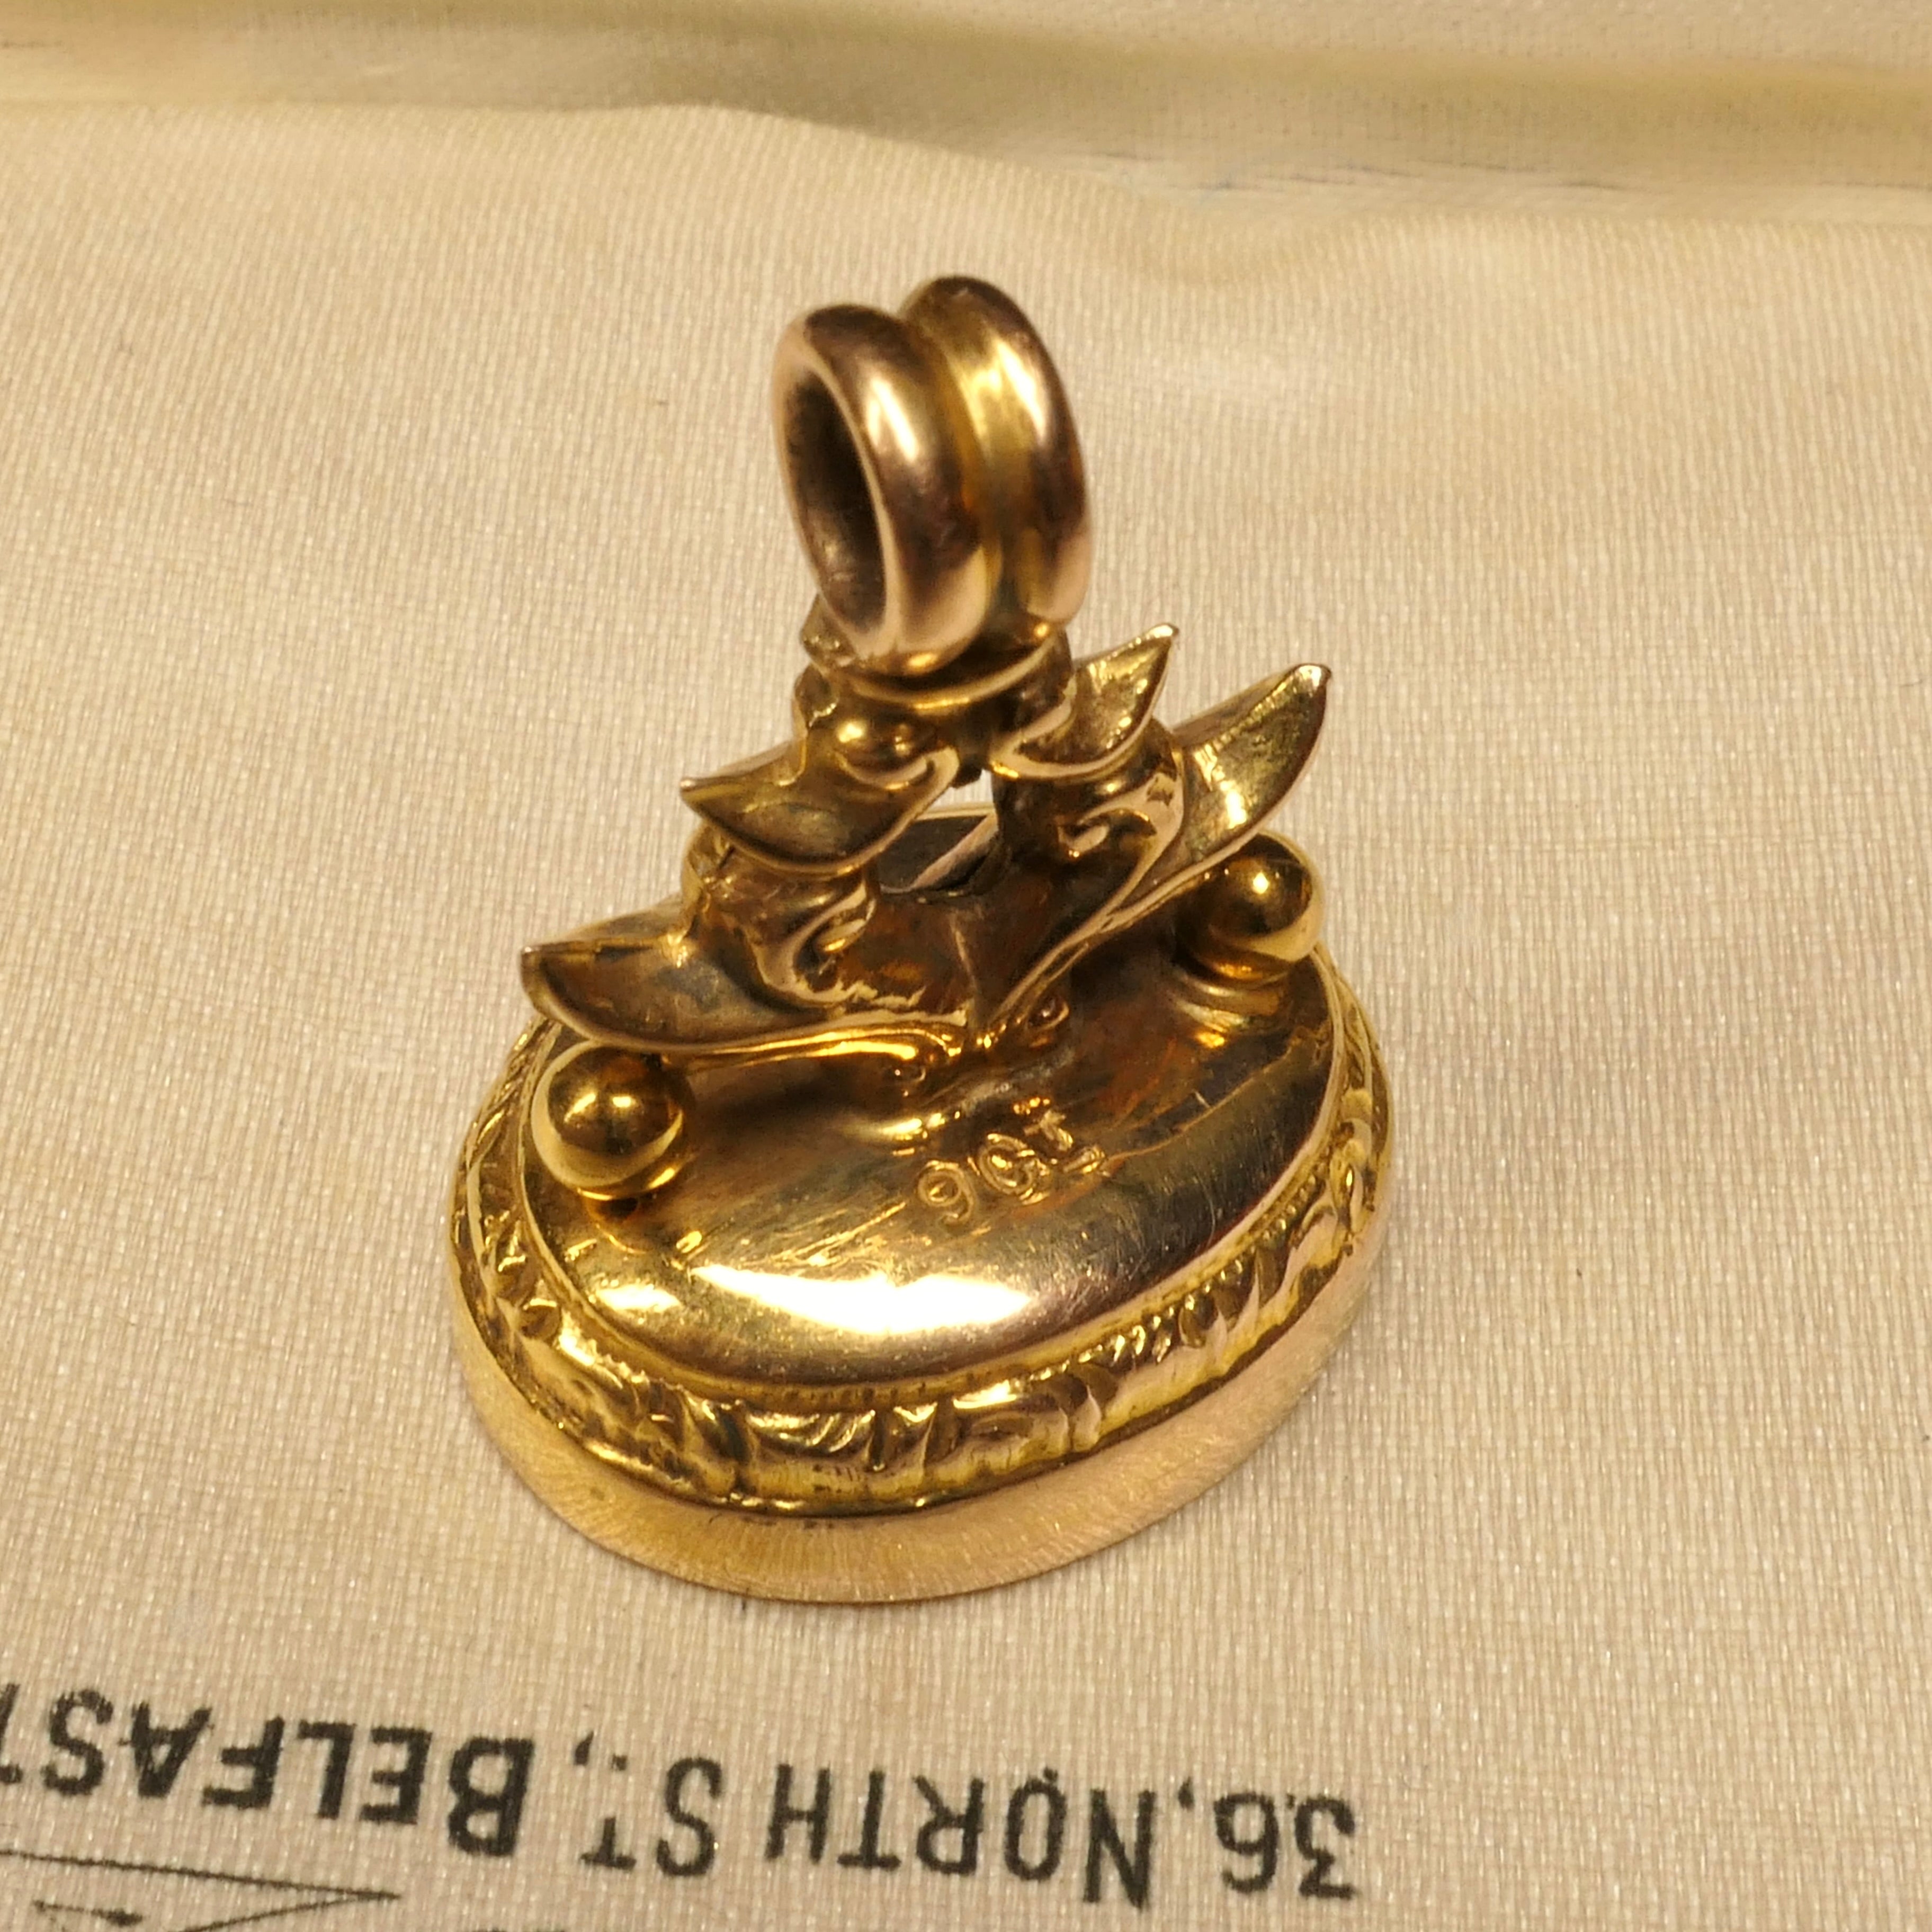 Antique, 9ct Gold, Ornate Fob Pendant